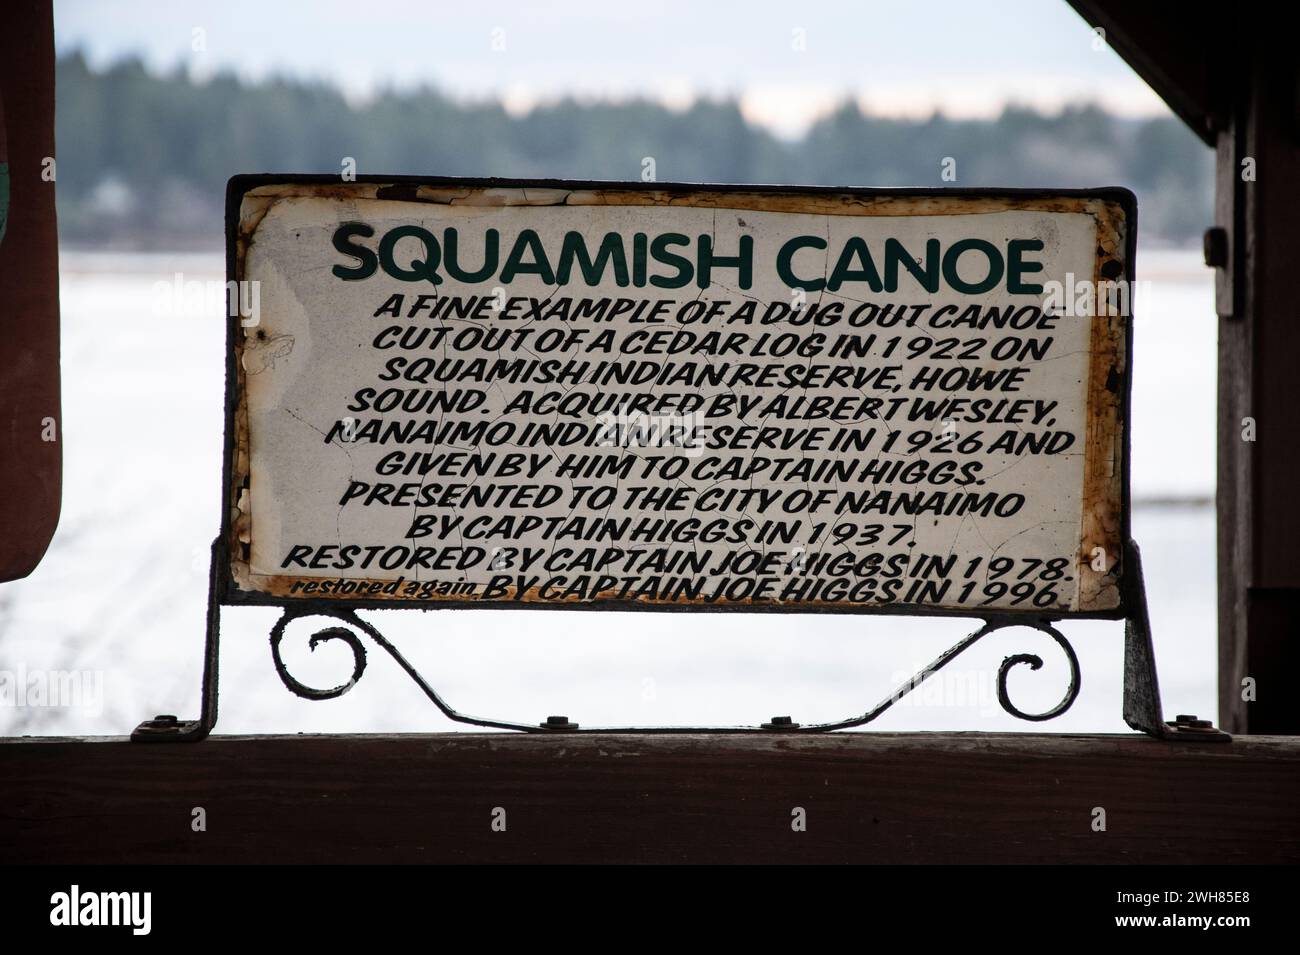 Squamish canoe sign describing history of the canoe in Nanaimo, British Columbia, Canada Stock Photo